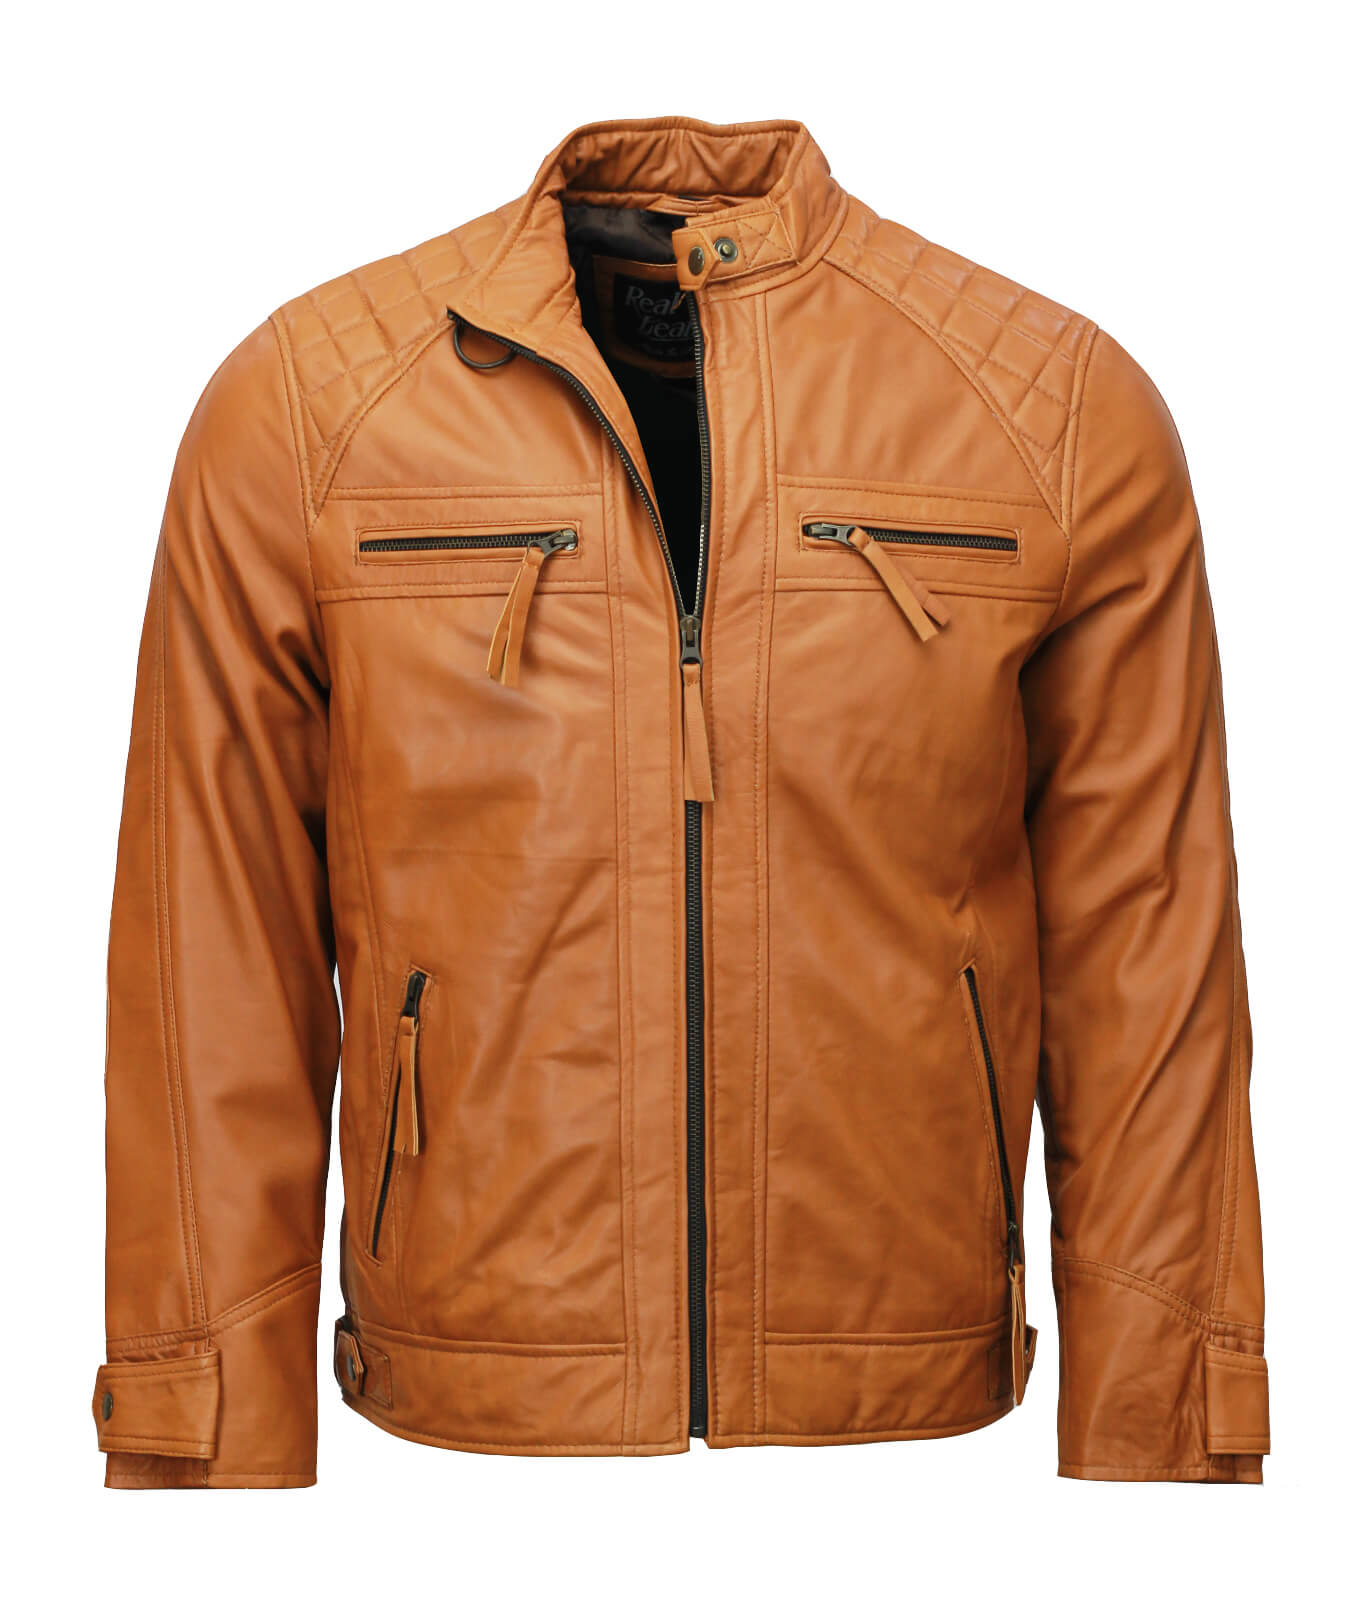 Mens Tan Motorcycle Leather Jacket